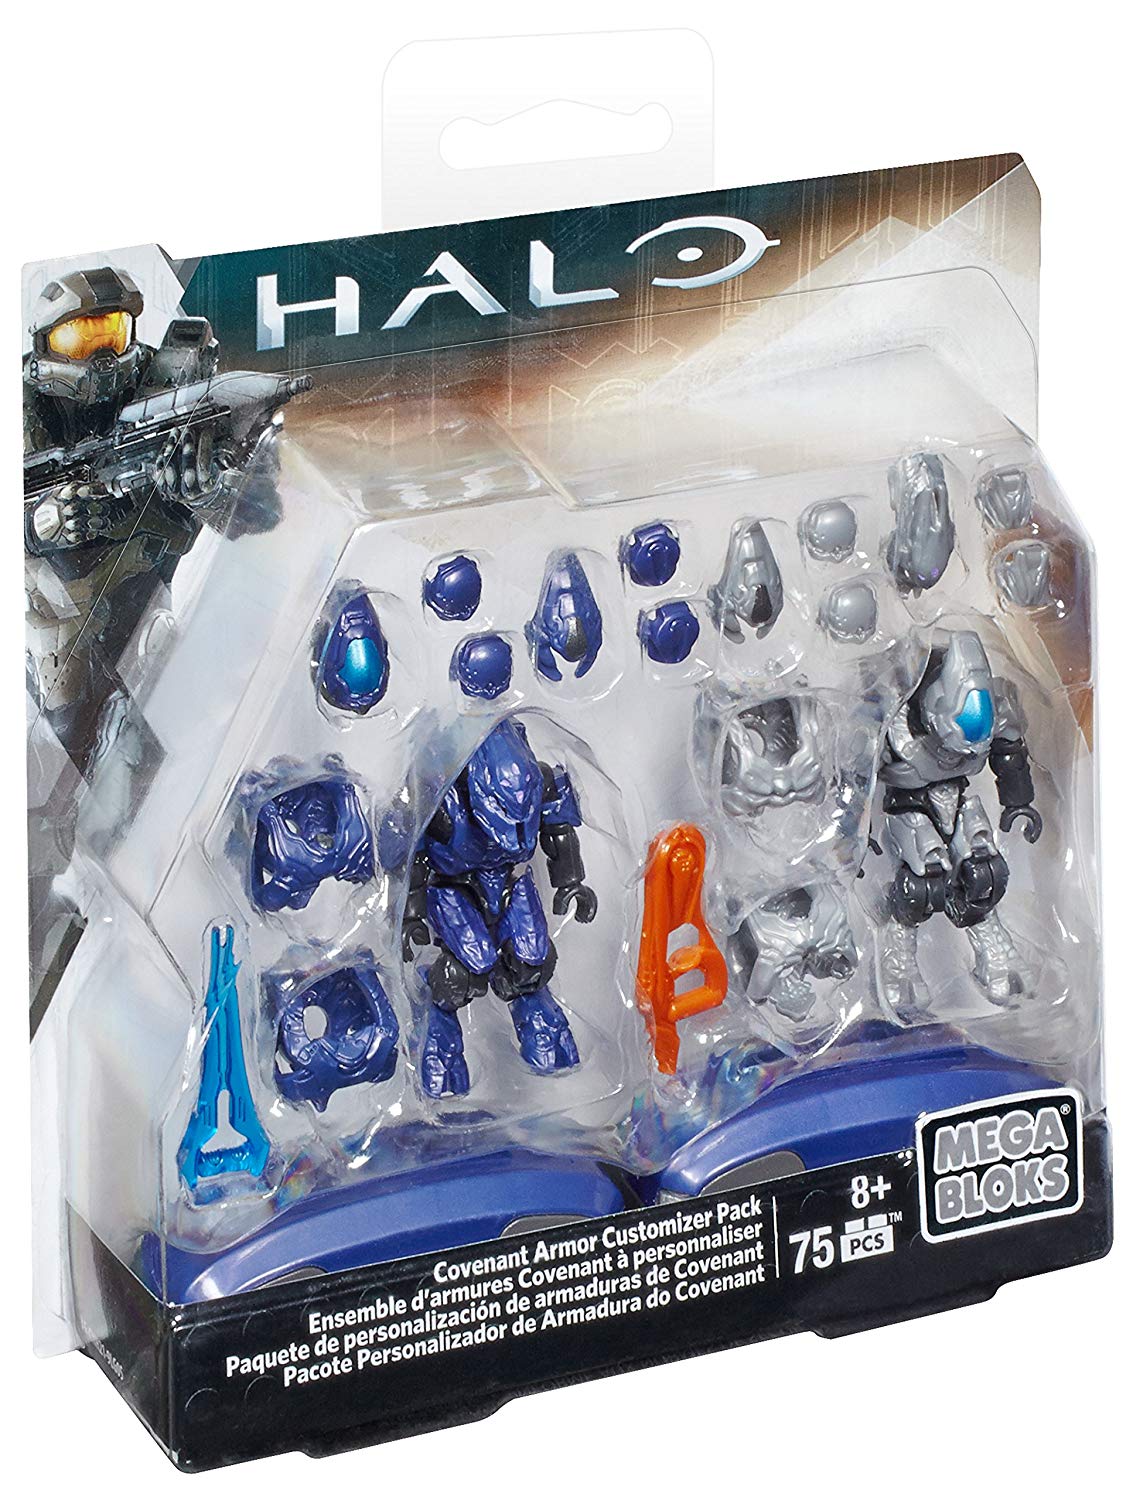 Mega Construx Halo Covenant Armor Customizer Pack